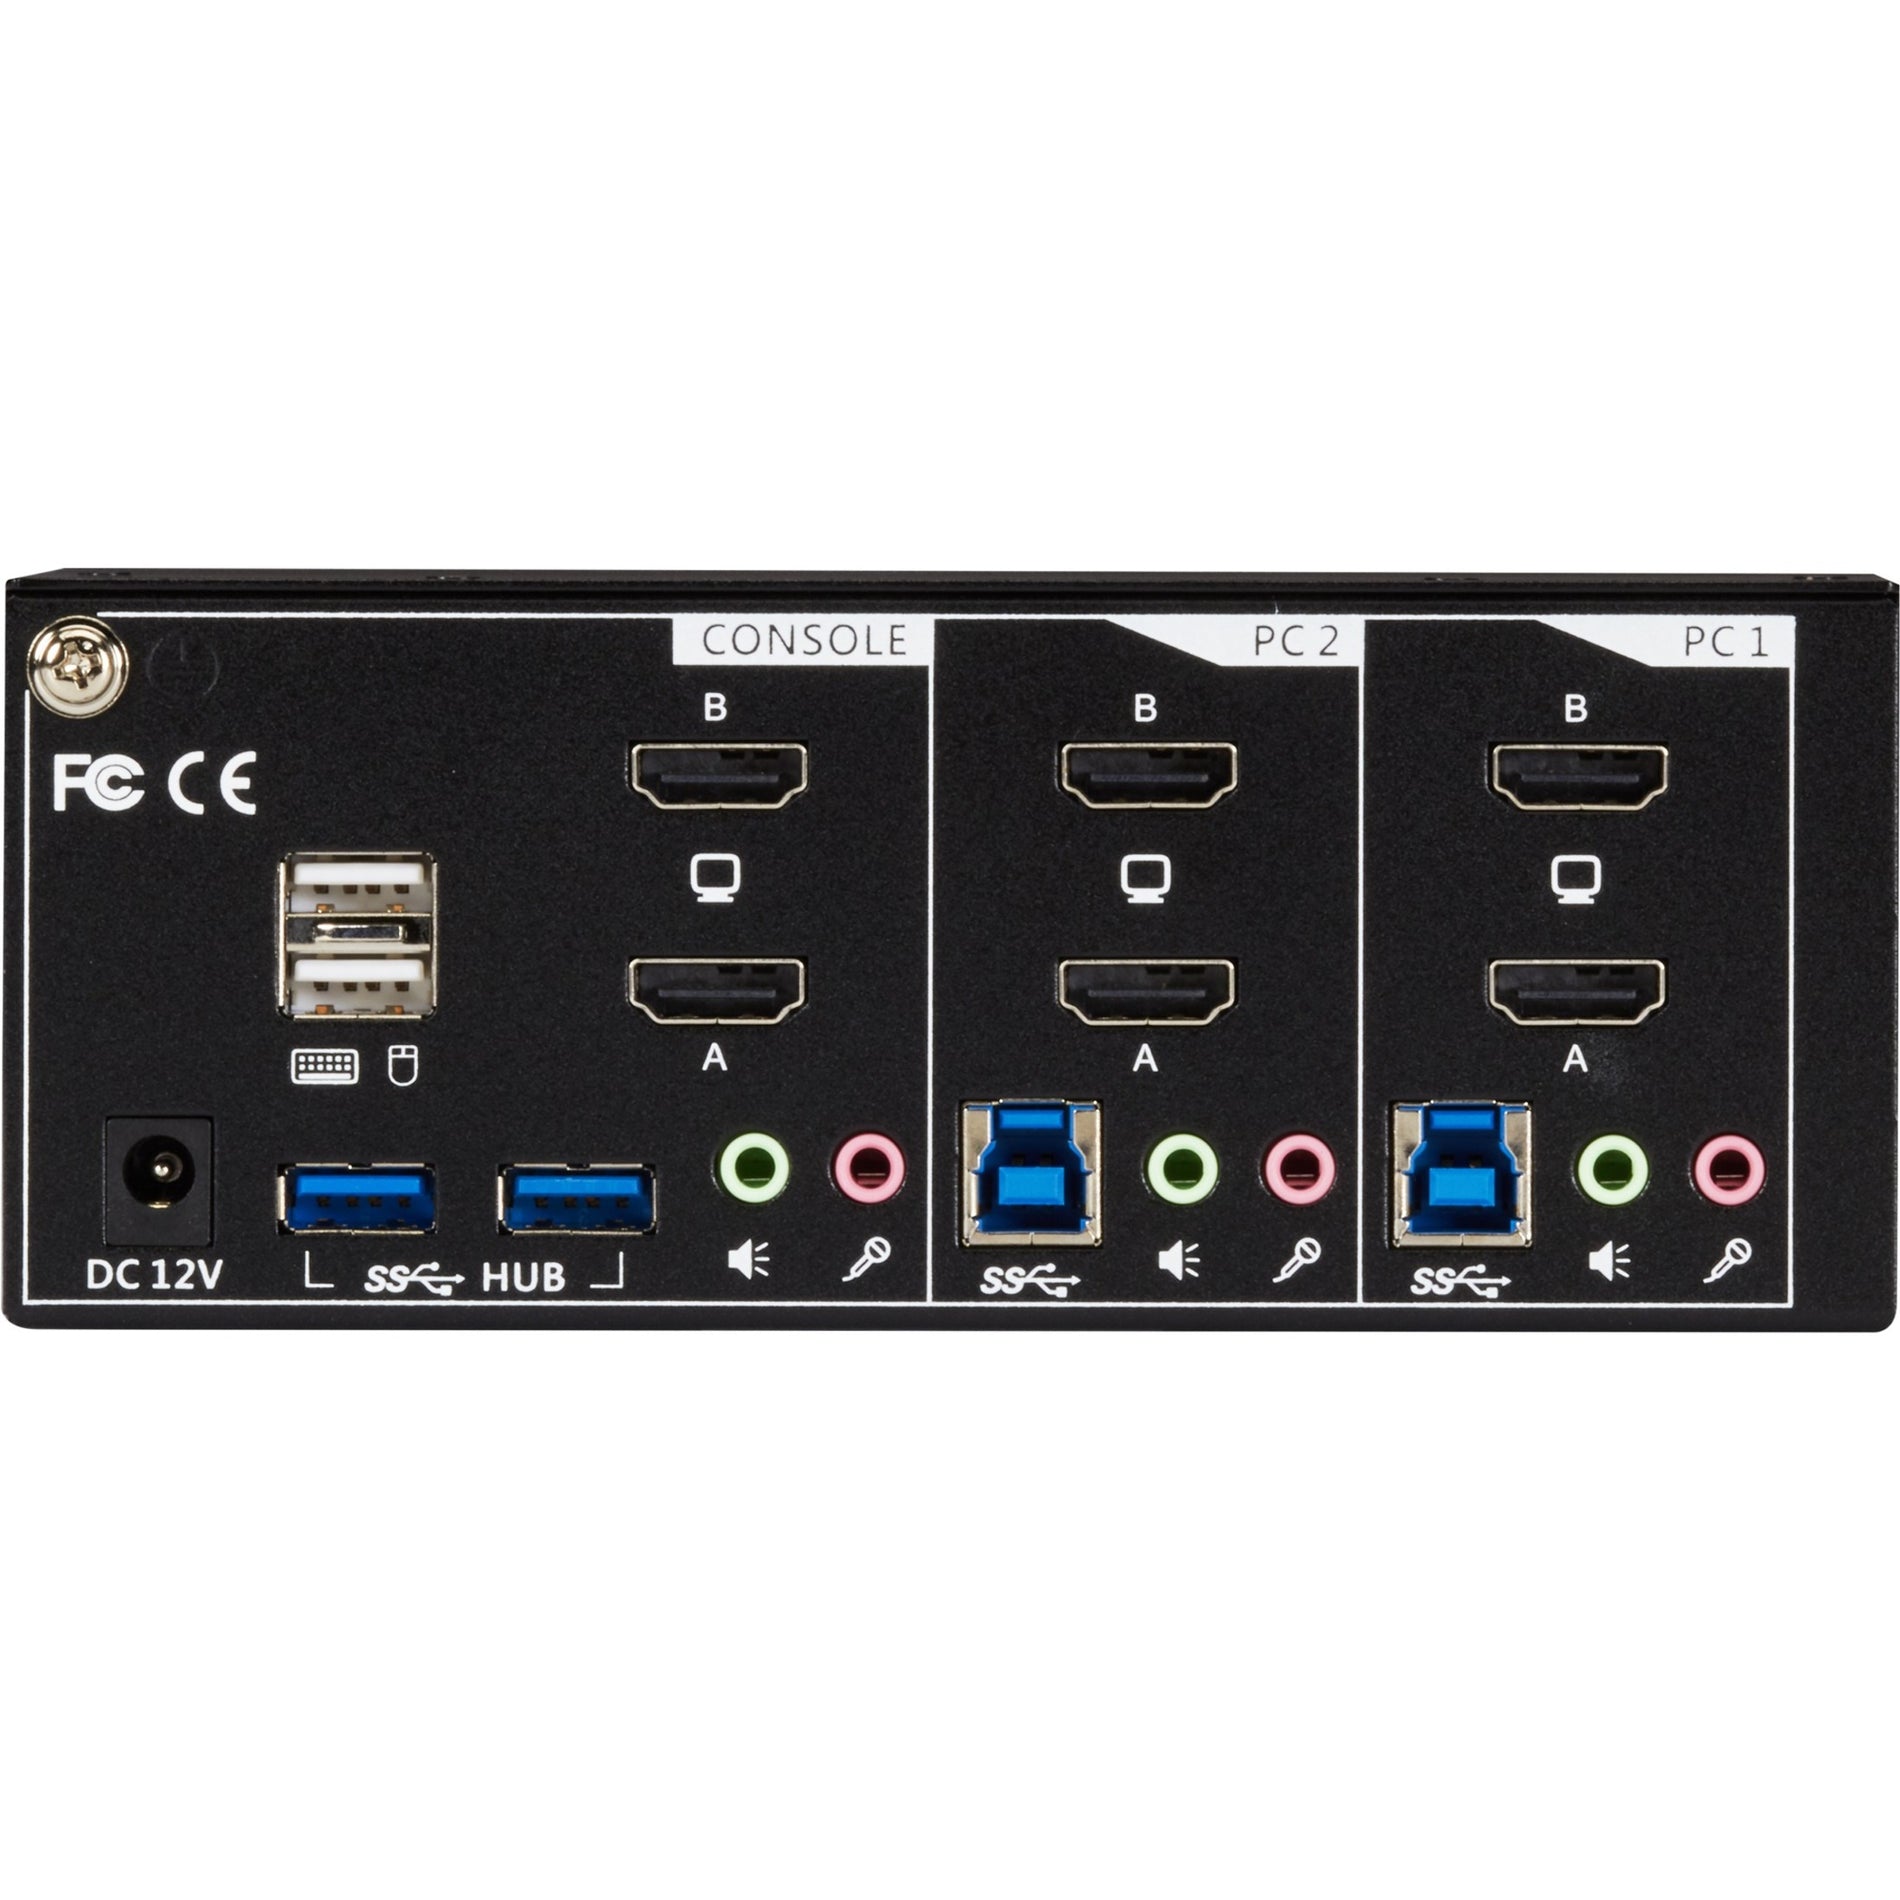 Black Box KV6222H KVM Switch - 2-Port, Dual-Monitor, HDMI 2.0, 4K 60Hz, USB 3.0 Hub, Audio, Share Two 4K Displays with Two Computers